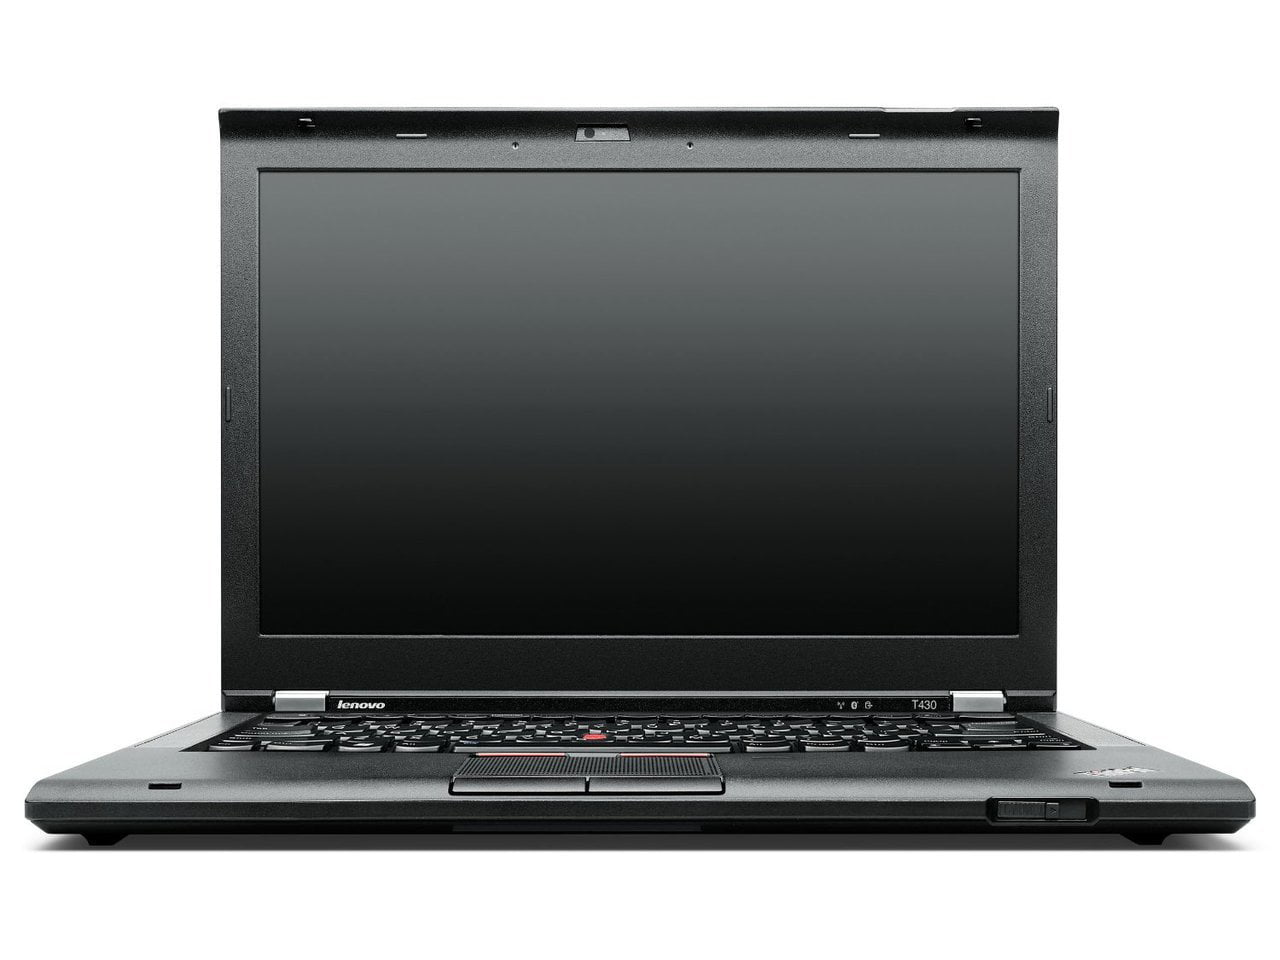 Lenovo ThinkPad T430s 14" Laptop Intel Corei5-3320M to 3.3GHz, Win10 Pro, 500GB HD, 8GB RAM (Refurbished) - Walmart.com